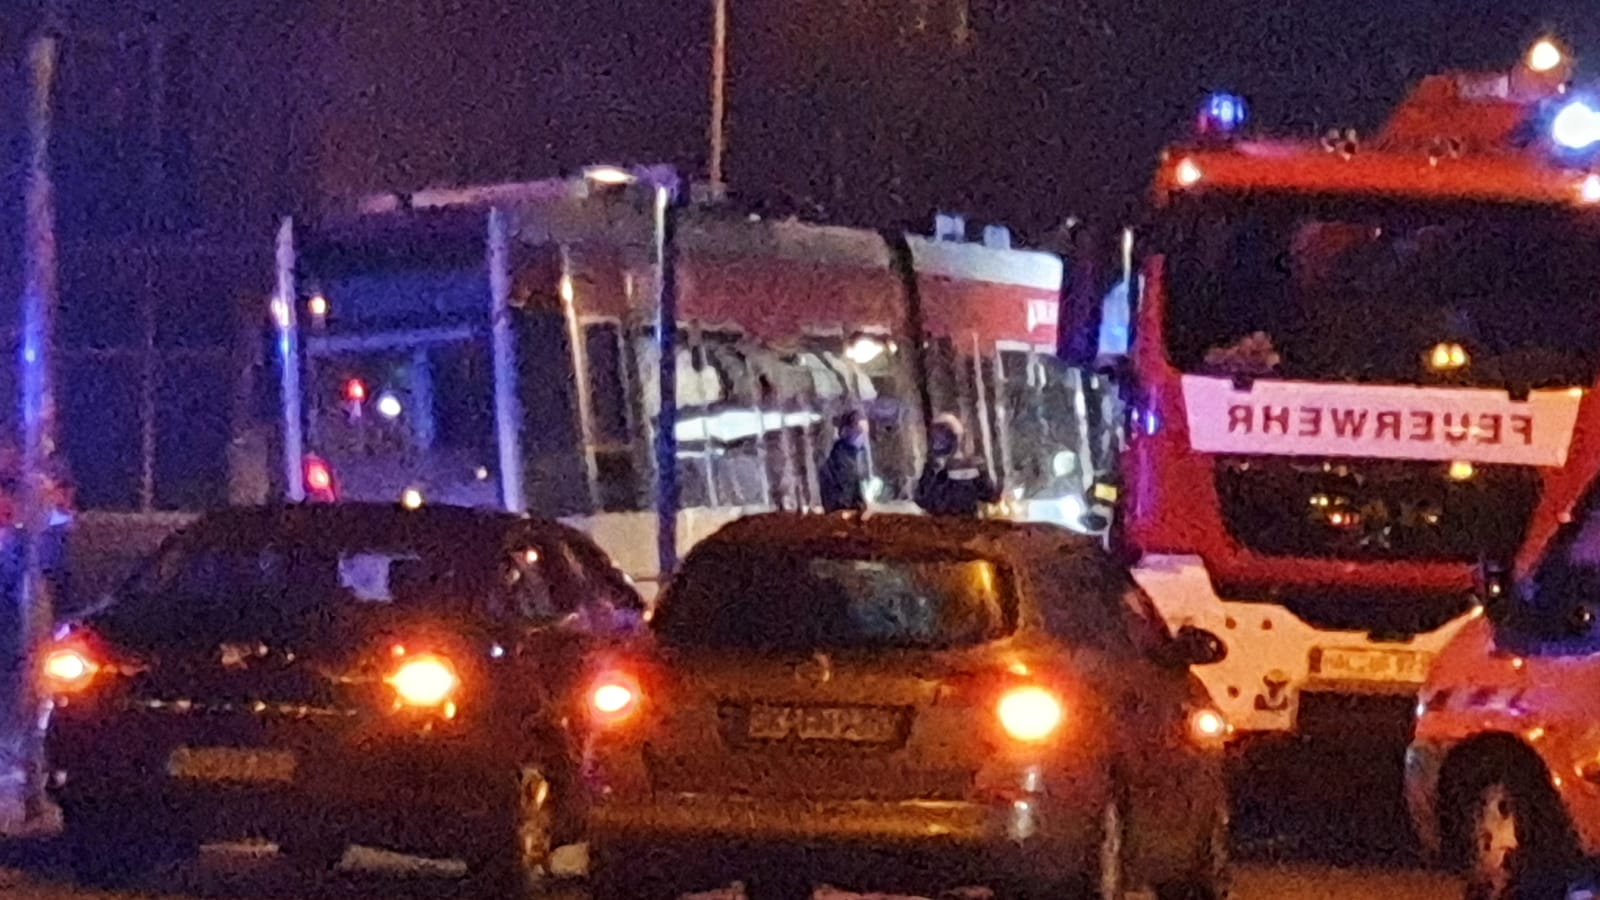 Halle unfall straßenbahn Köln: Zwei